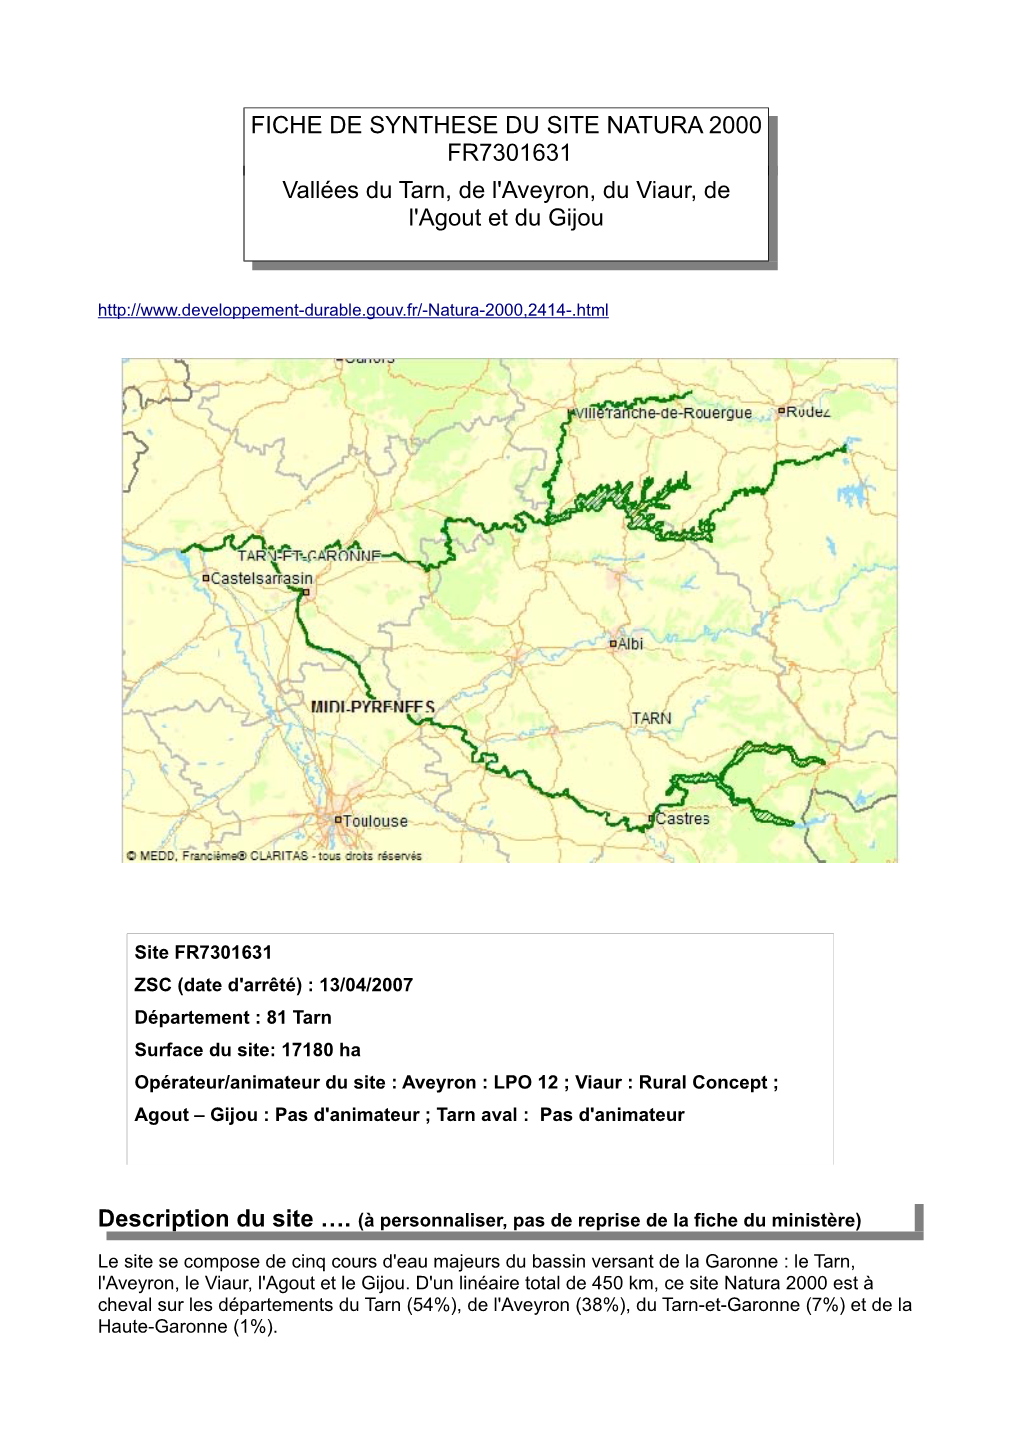 FR7301631 Vallee-Tarn-Aveyron-Viaur-Agout